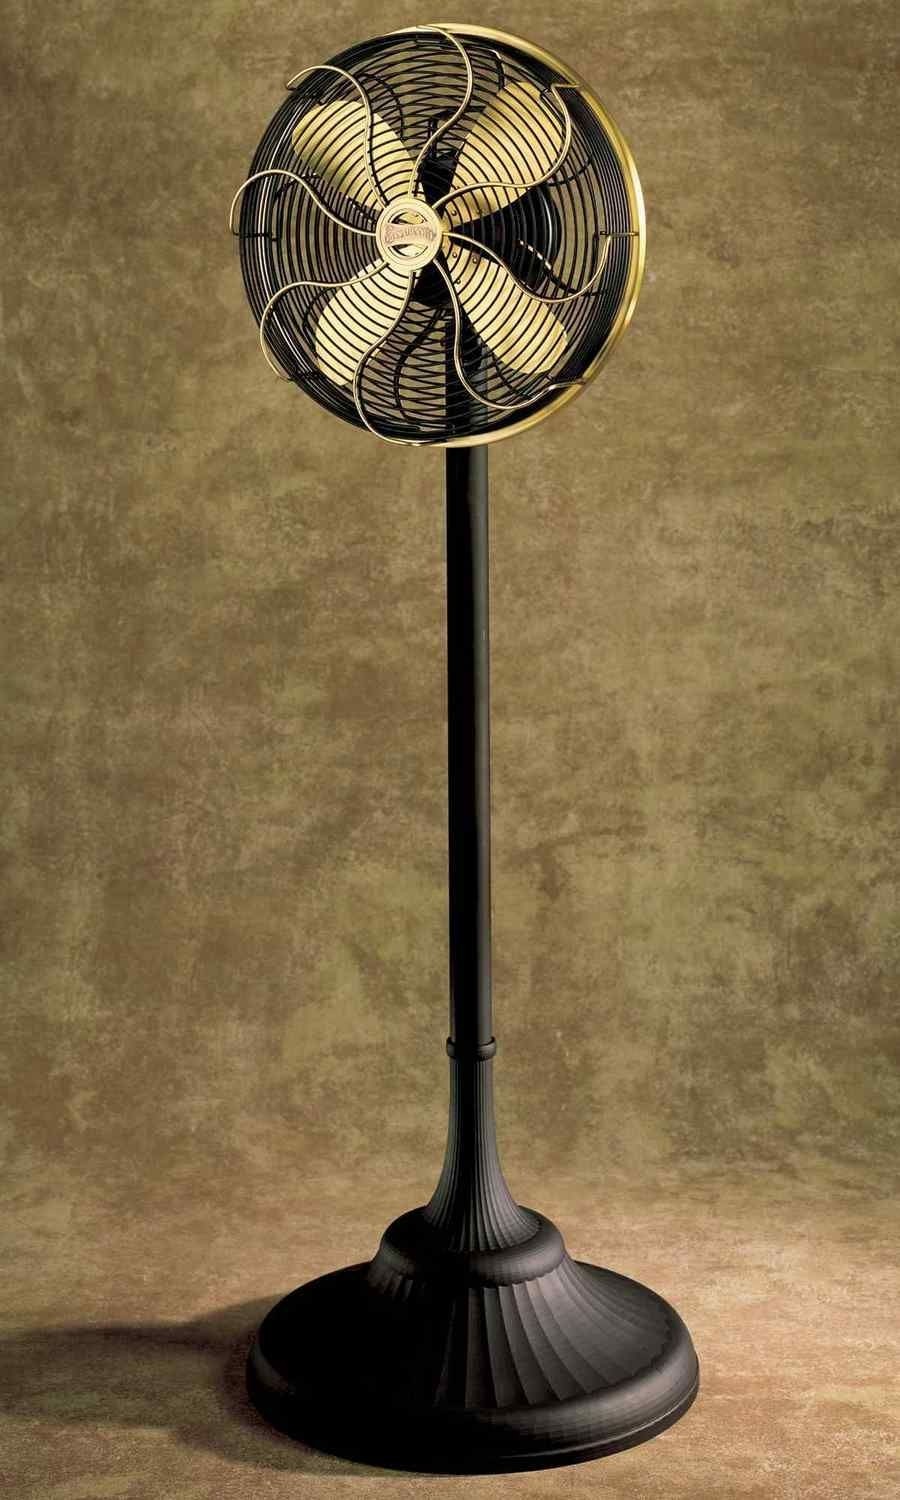 Antique pedestal fan for retro interior floor fan